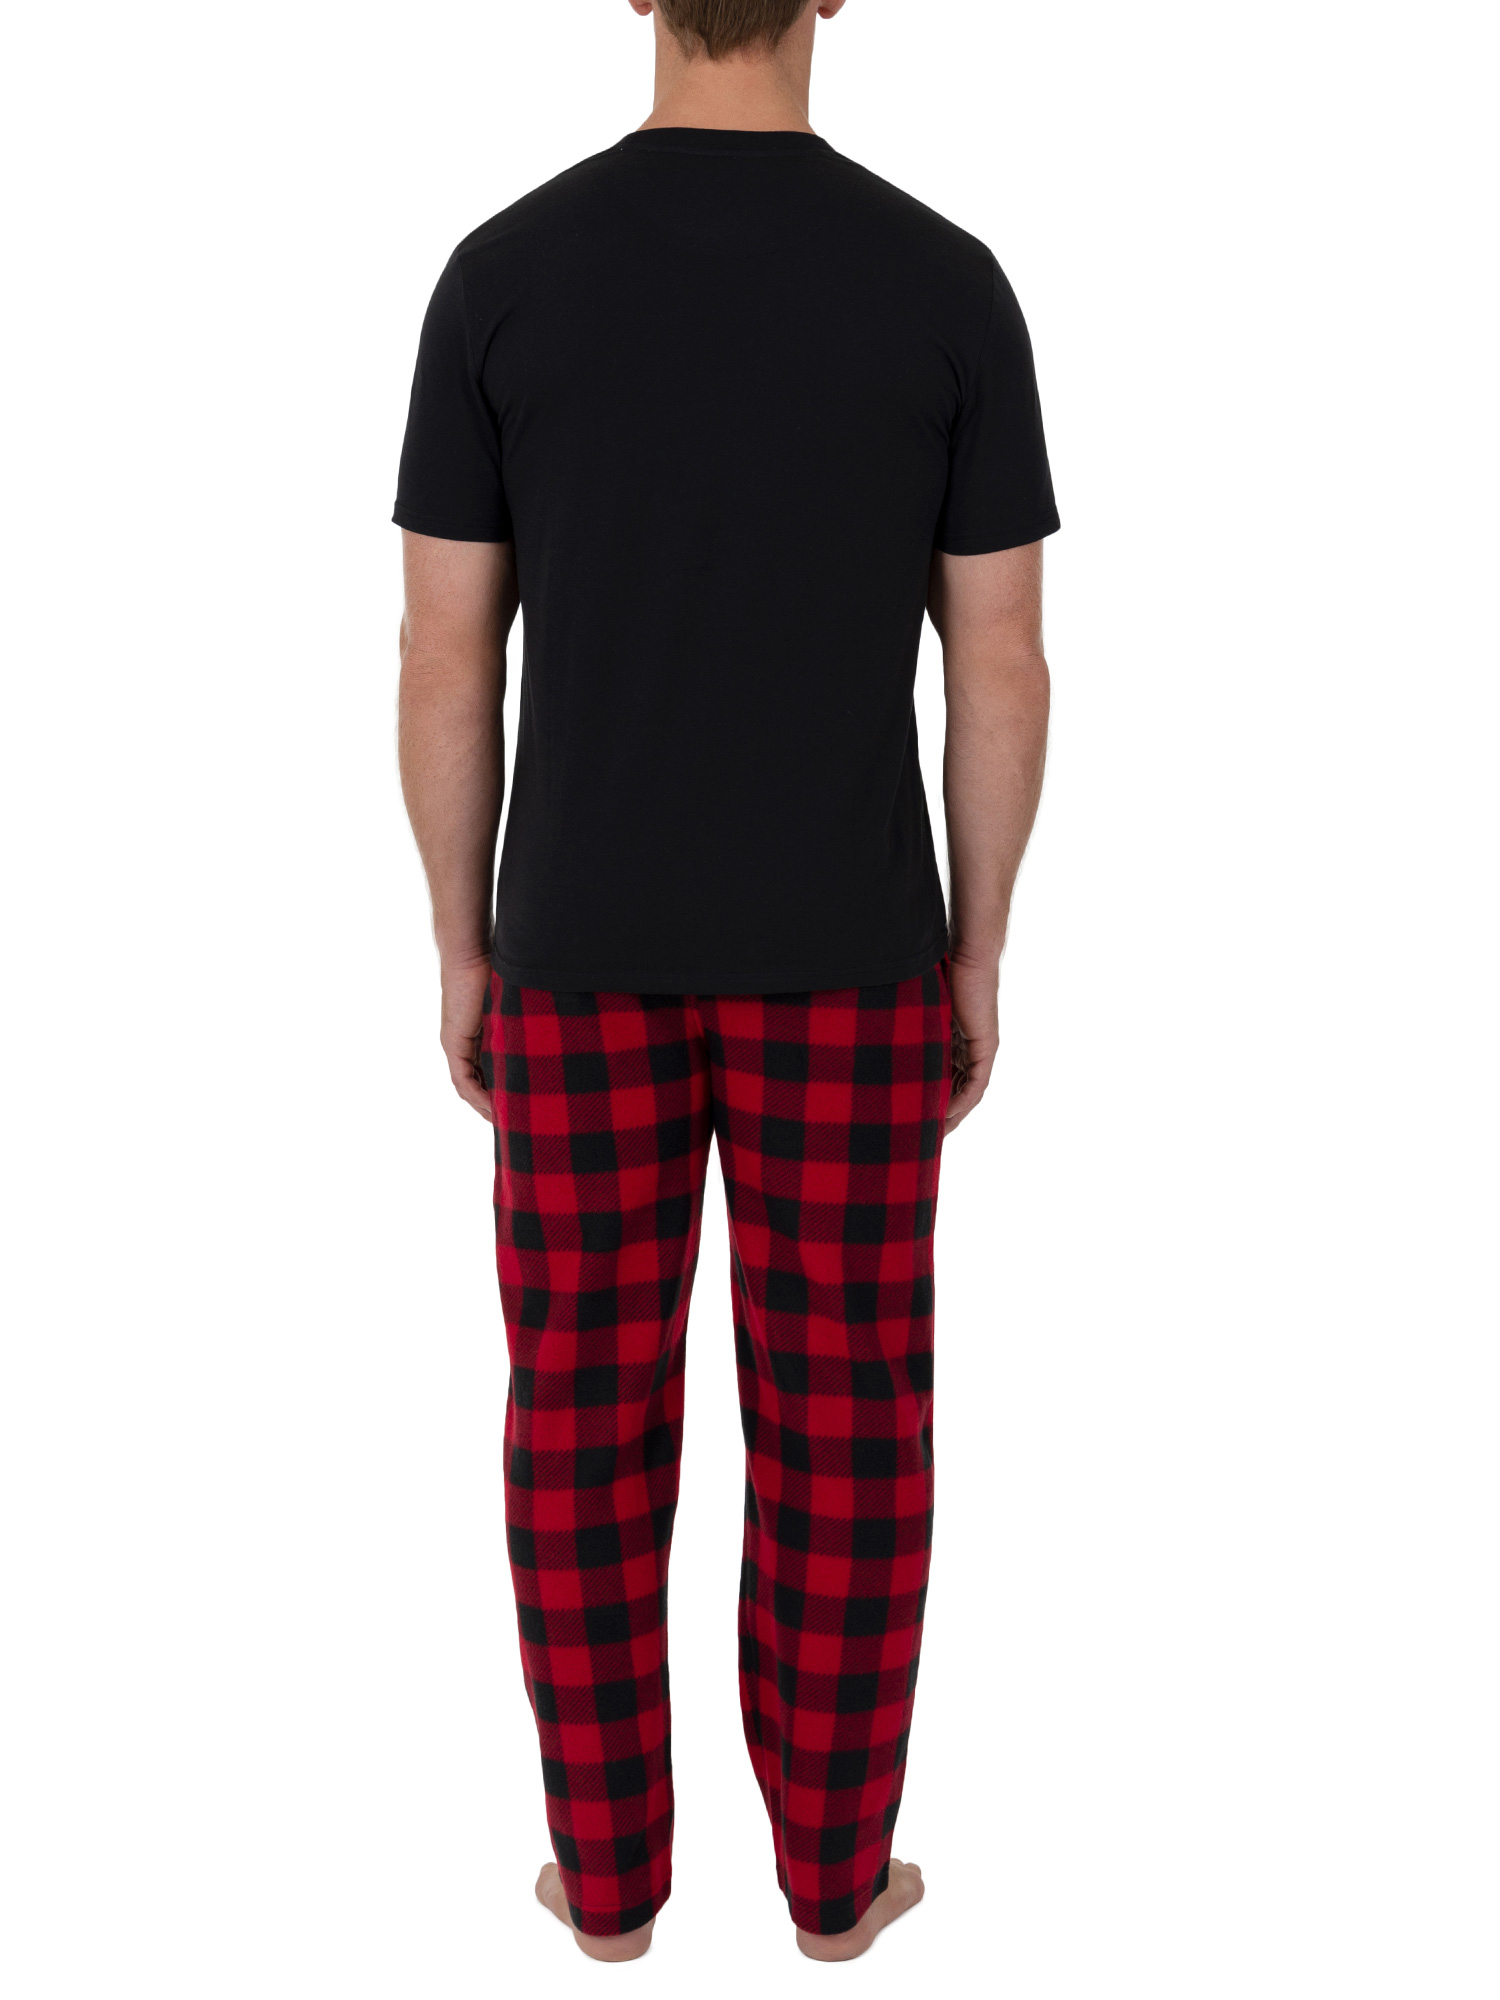 Fruit Of The Loom Men’s Short Sleeve Crewneck Top and Fleece Pajama Pants Set - image 5 of 5